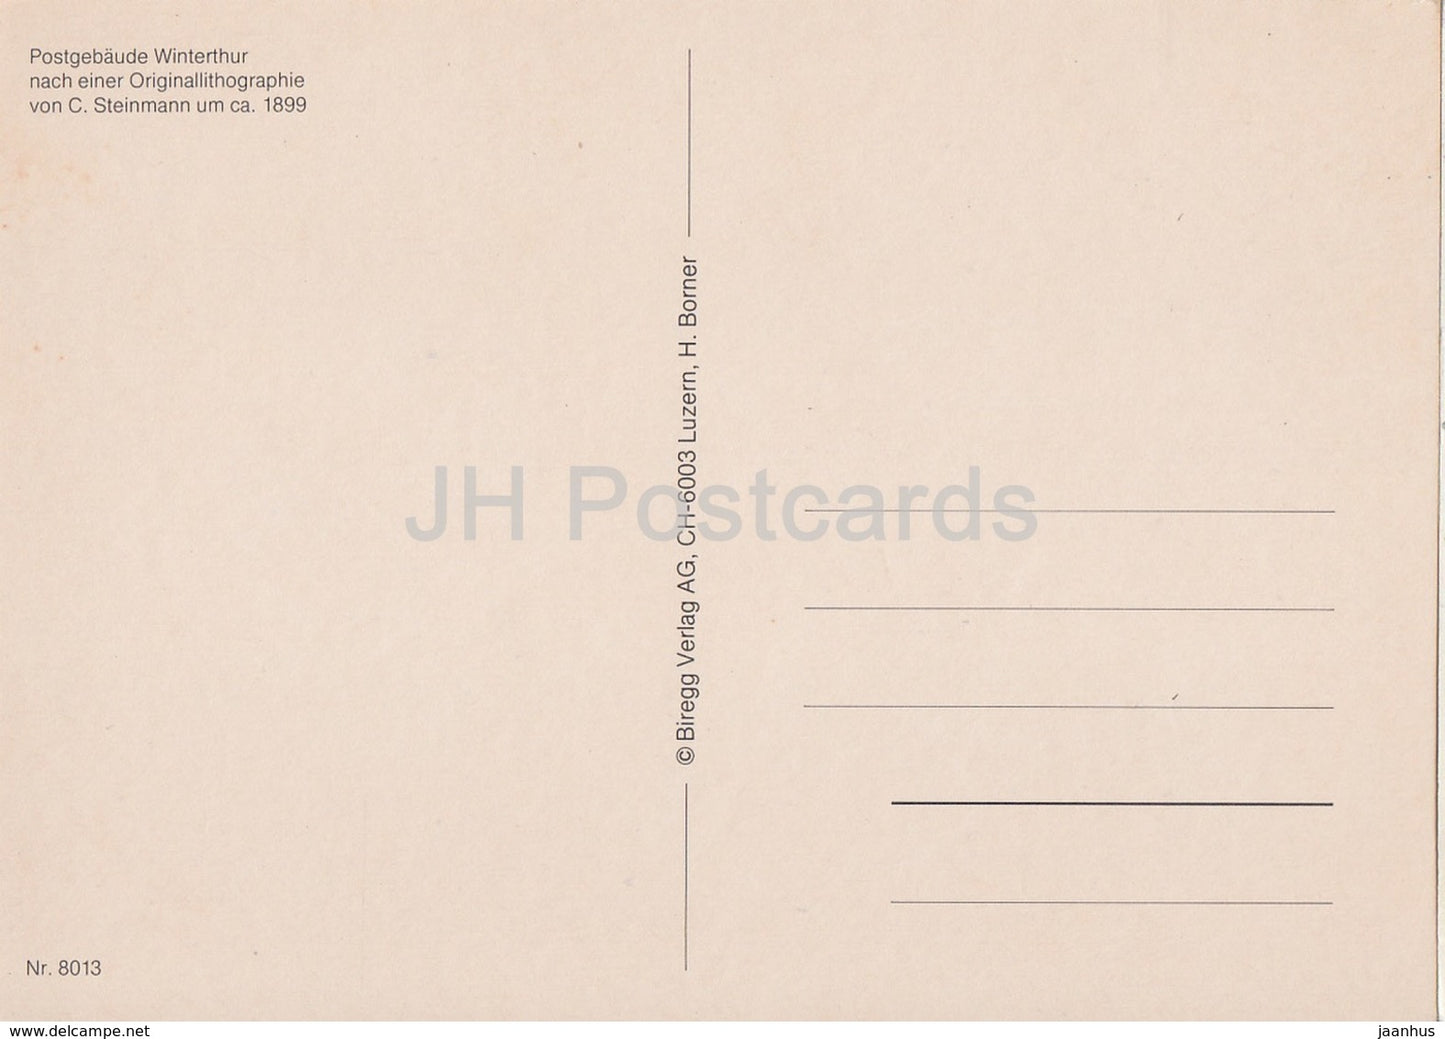 WIBRA 81 - Briefmarkaustellung Stufe III - Winterthur - 8013 - 1981 - Switzerland - unused